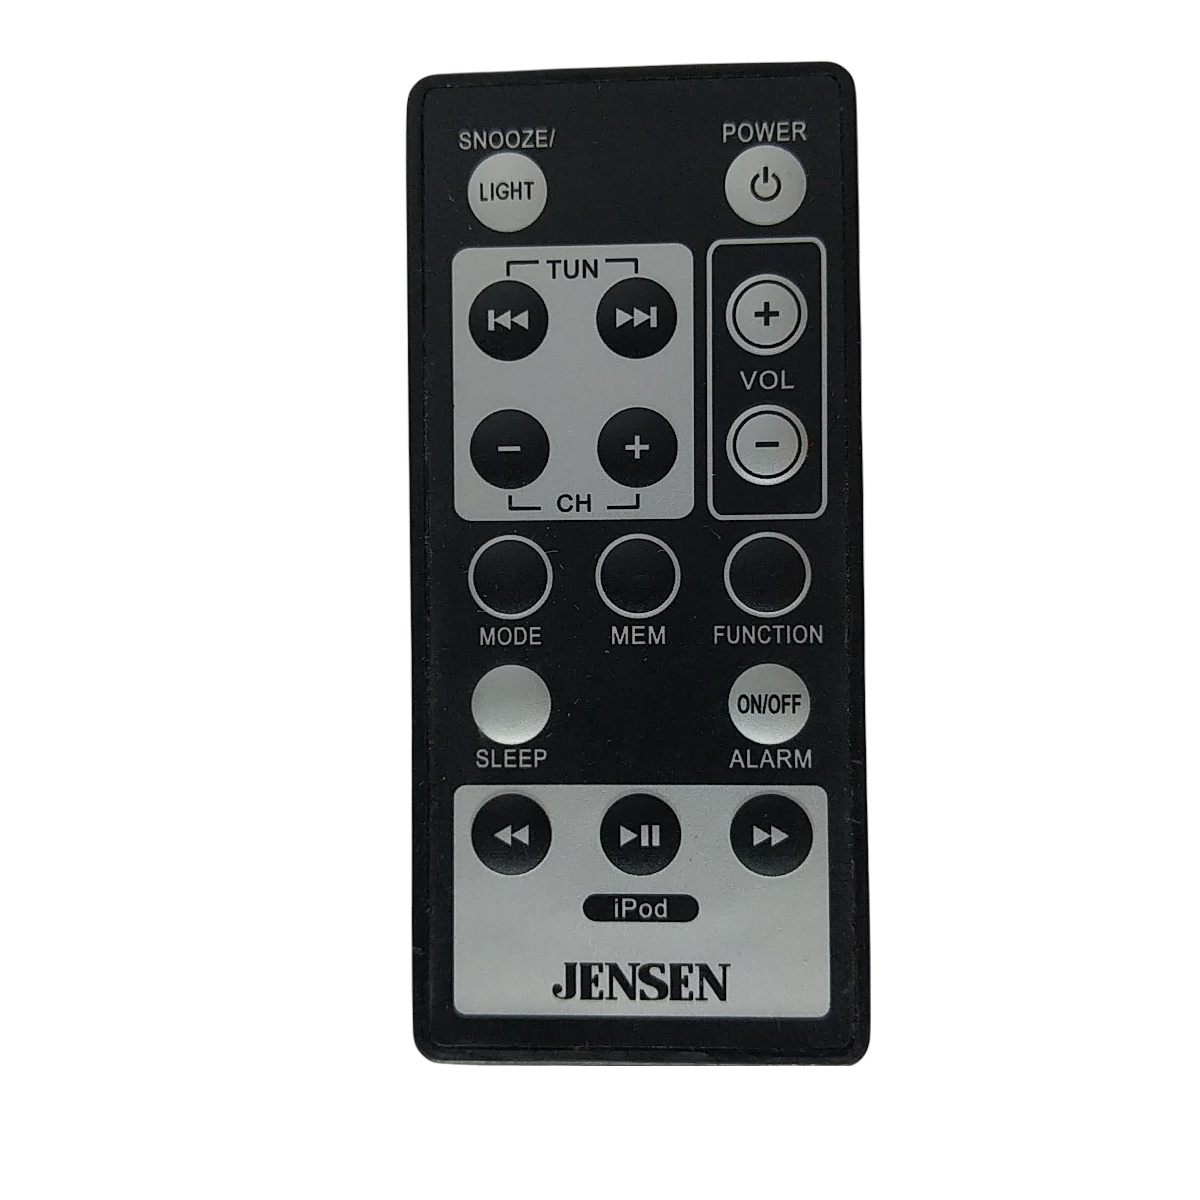 Genuine Jensen Ipod Audio Docking System Remote Control Tested Working - $19.80